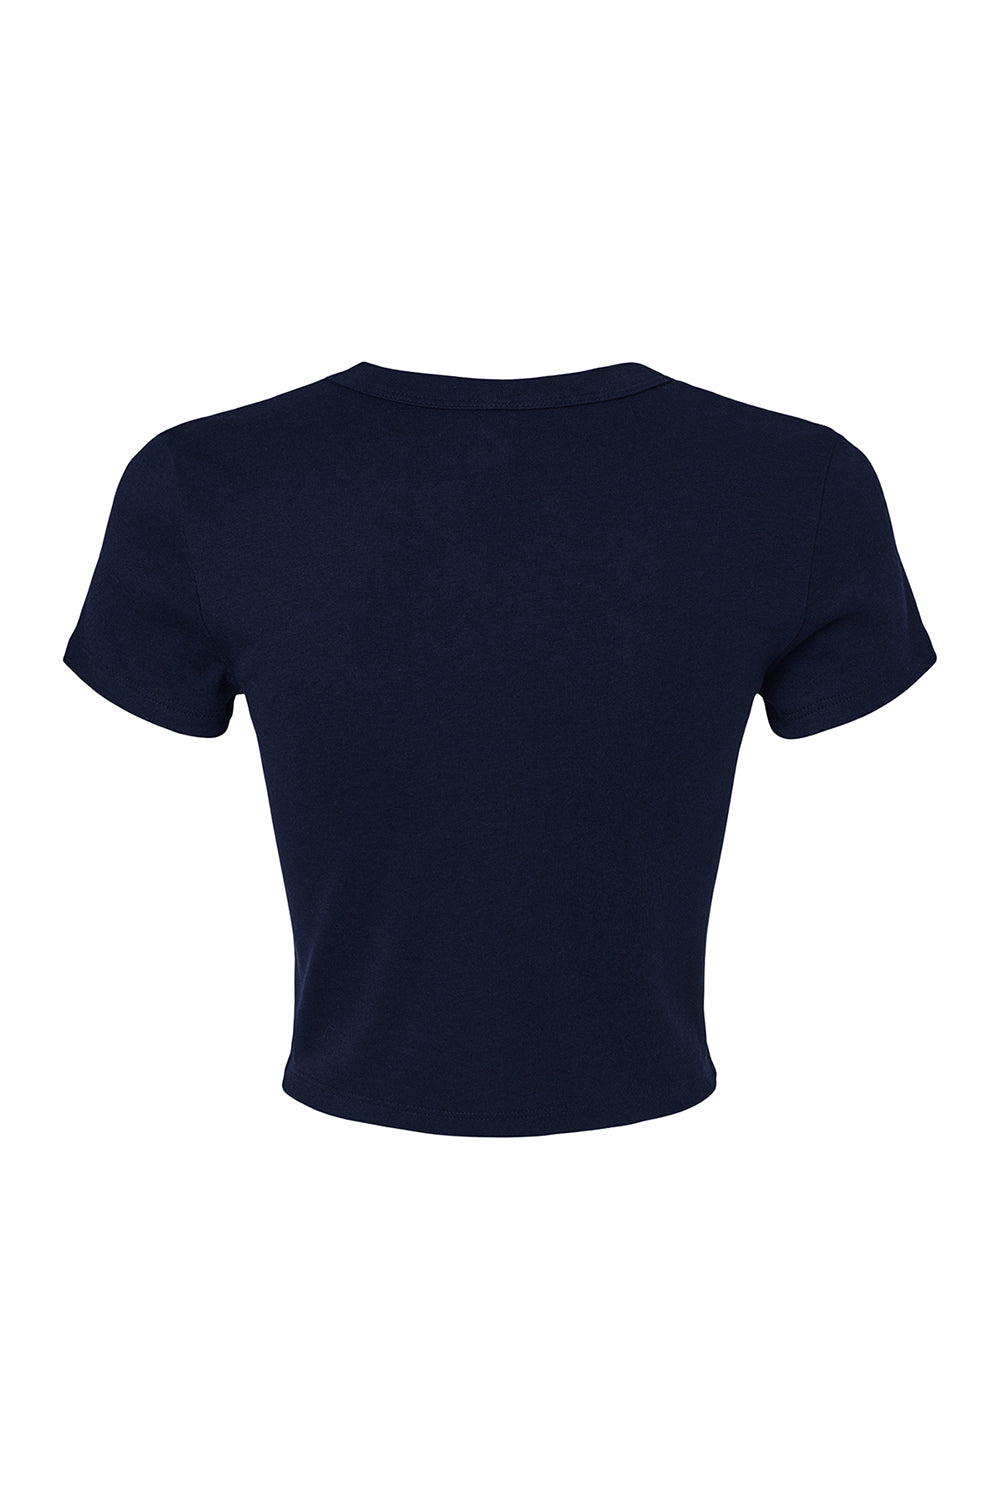 Bella + Canvas 1010BE Womens Micro Ribbed Short Sleeve Crewneck Baby T-Shirt Navy Blue Flat Back